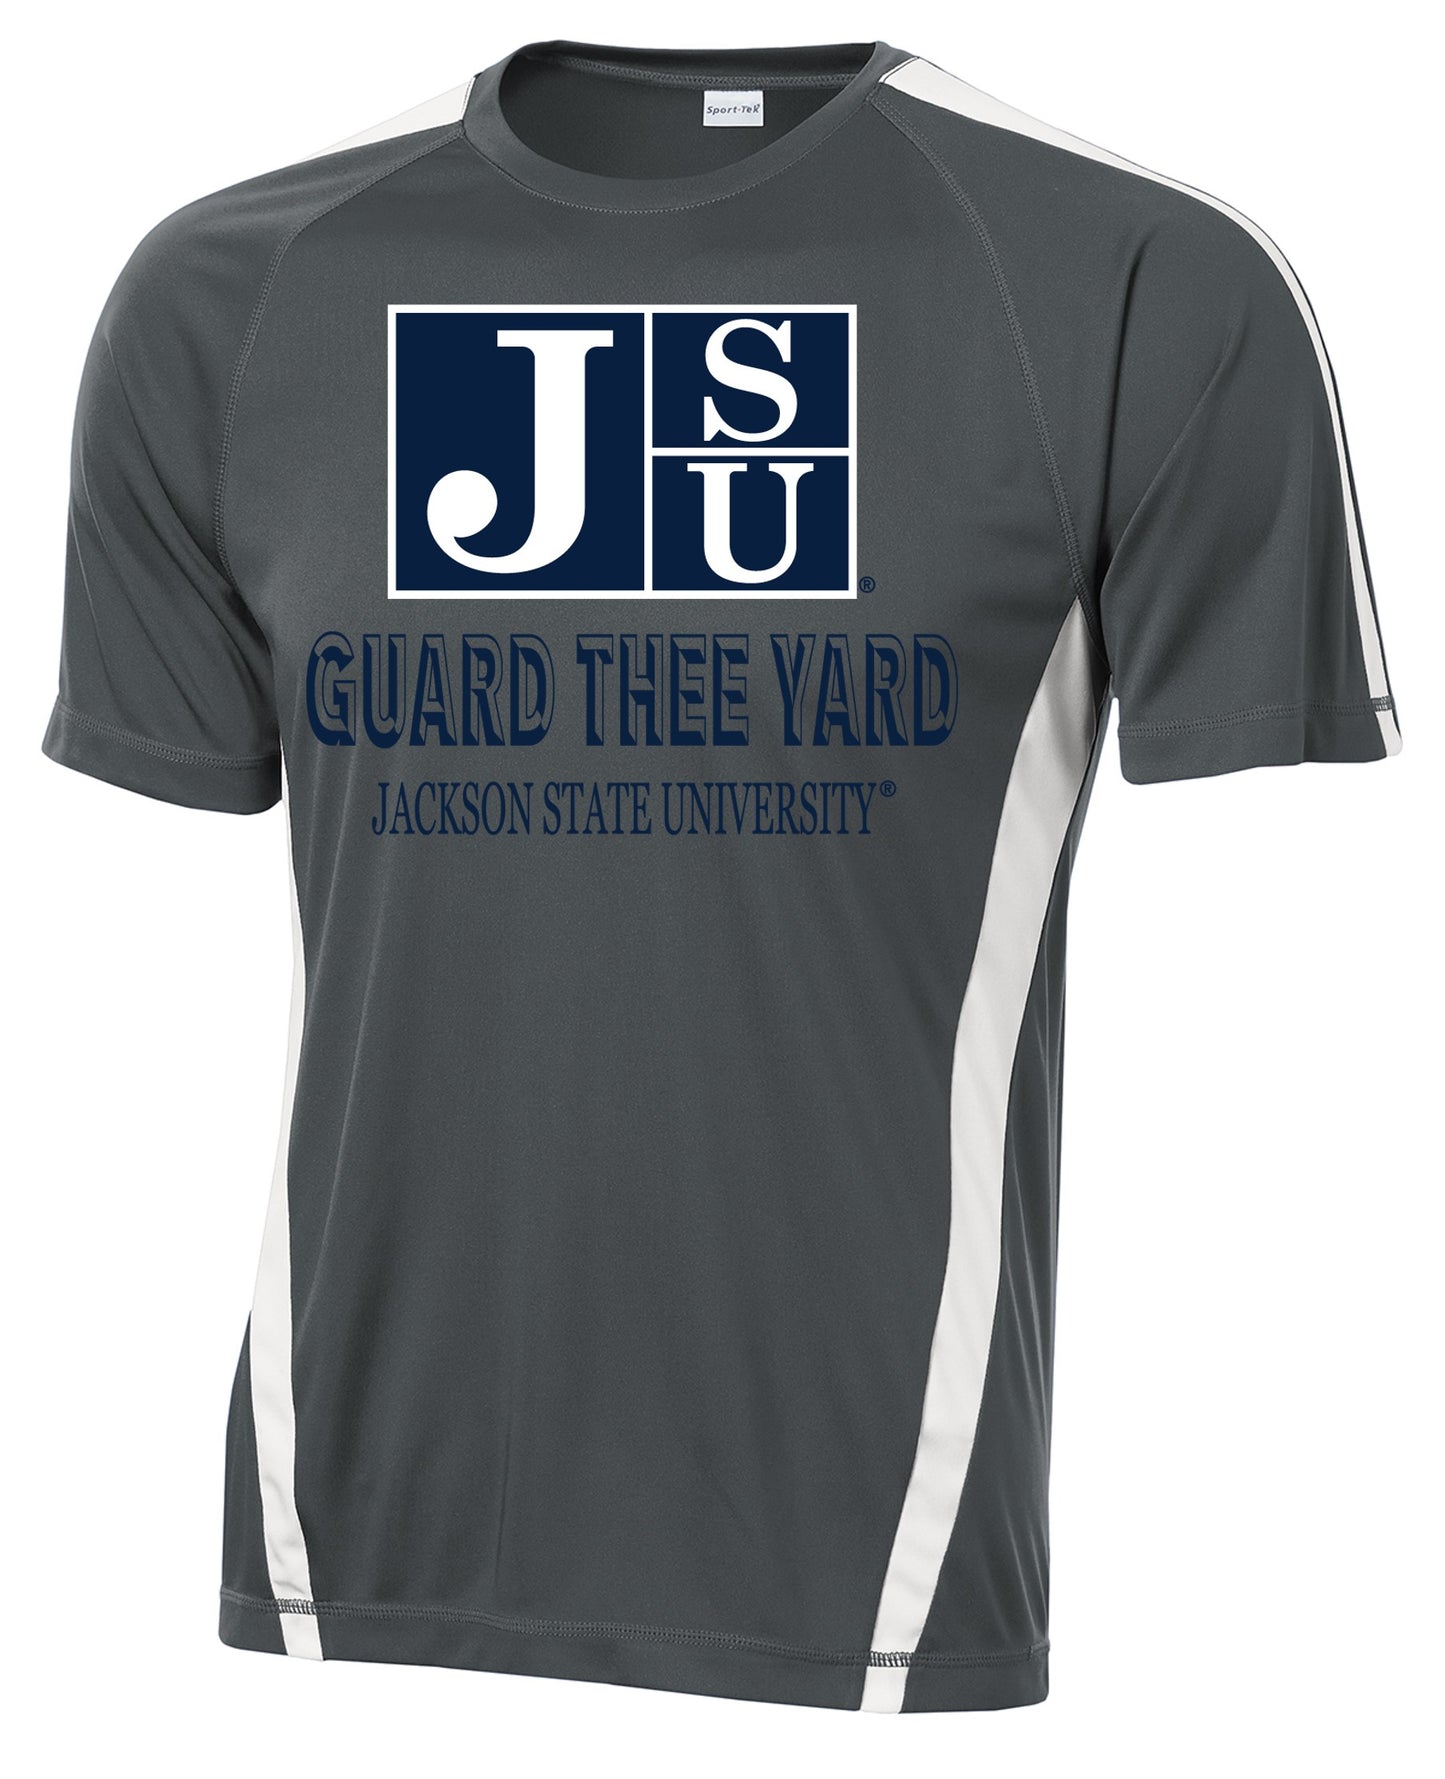 Guard Thee Yard (JSU Block) Performance Top